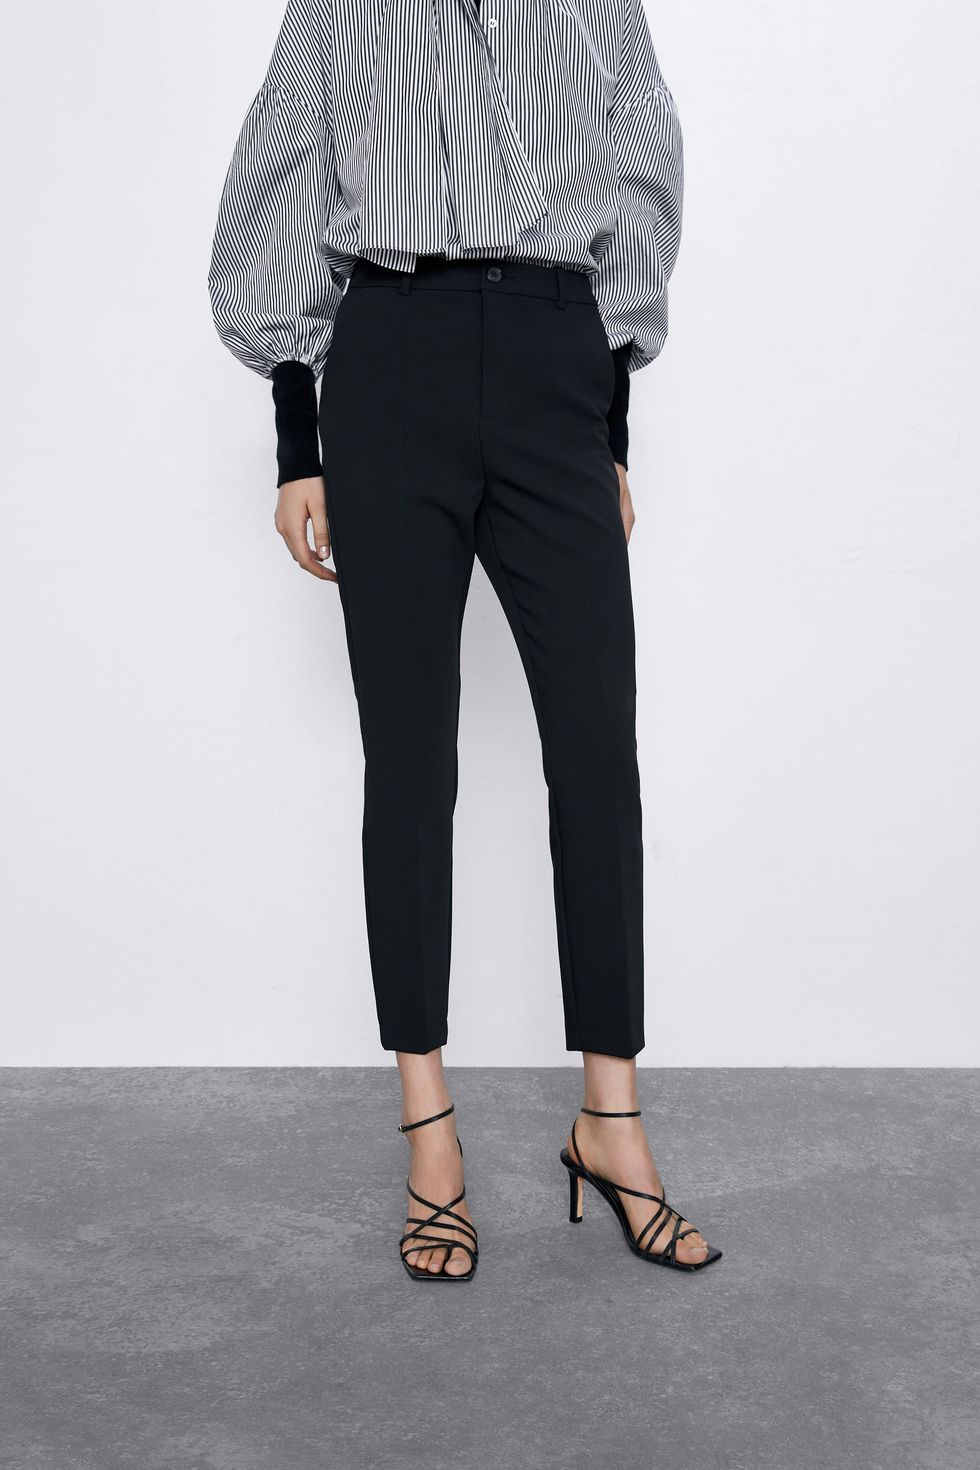 pantaloni neri zara moda donna inverno 2019 2020